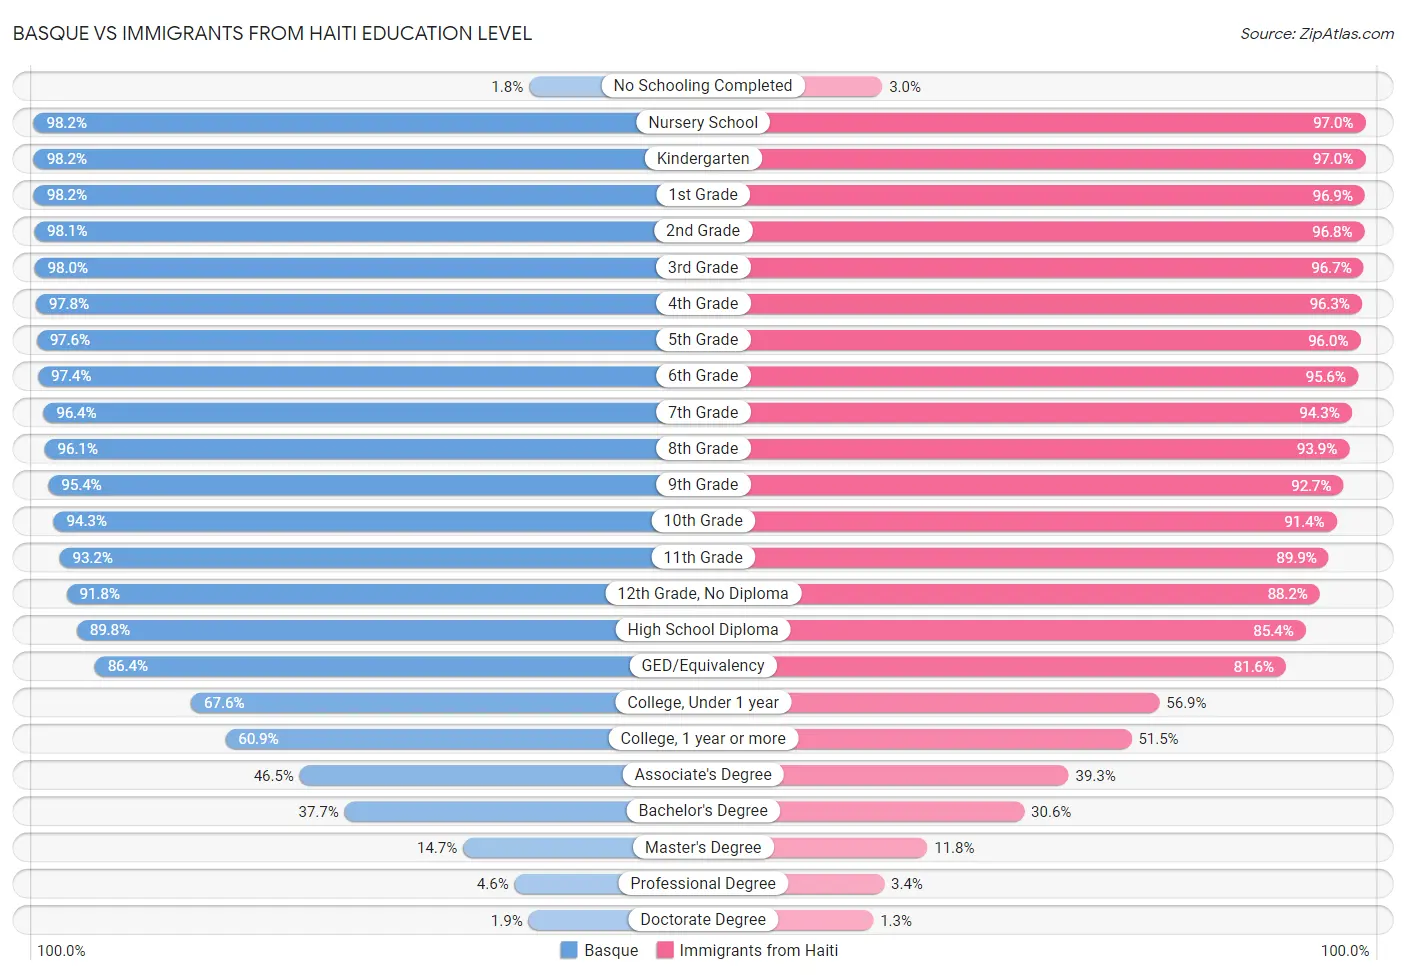 Basque vs Immigrants from Haiti Education Level